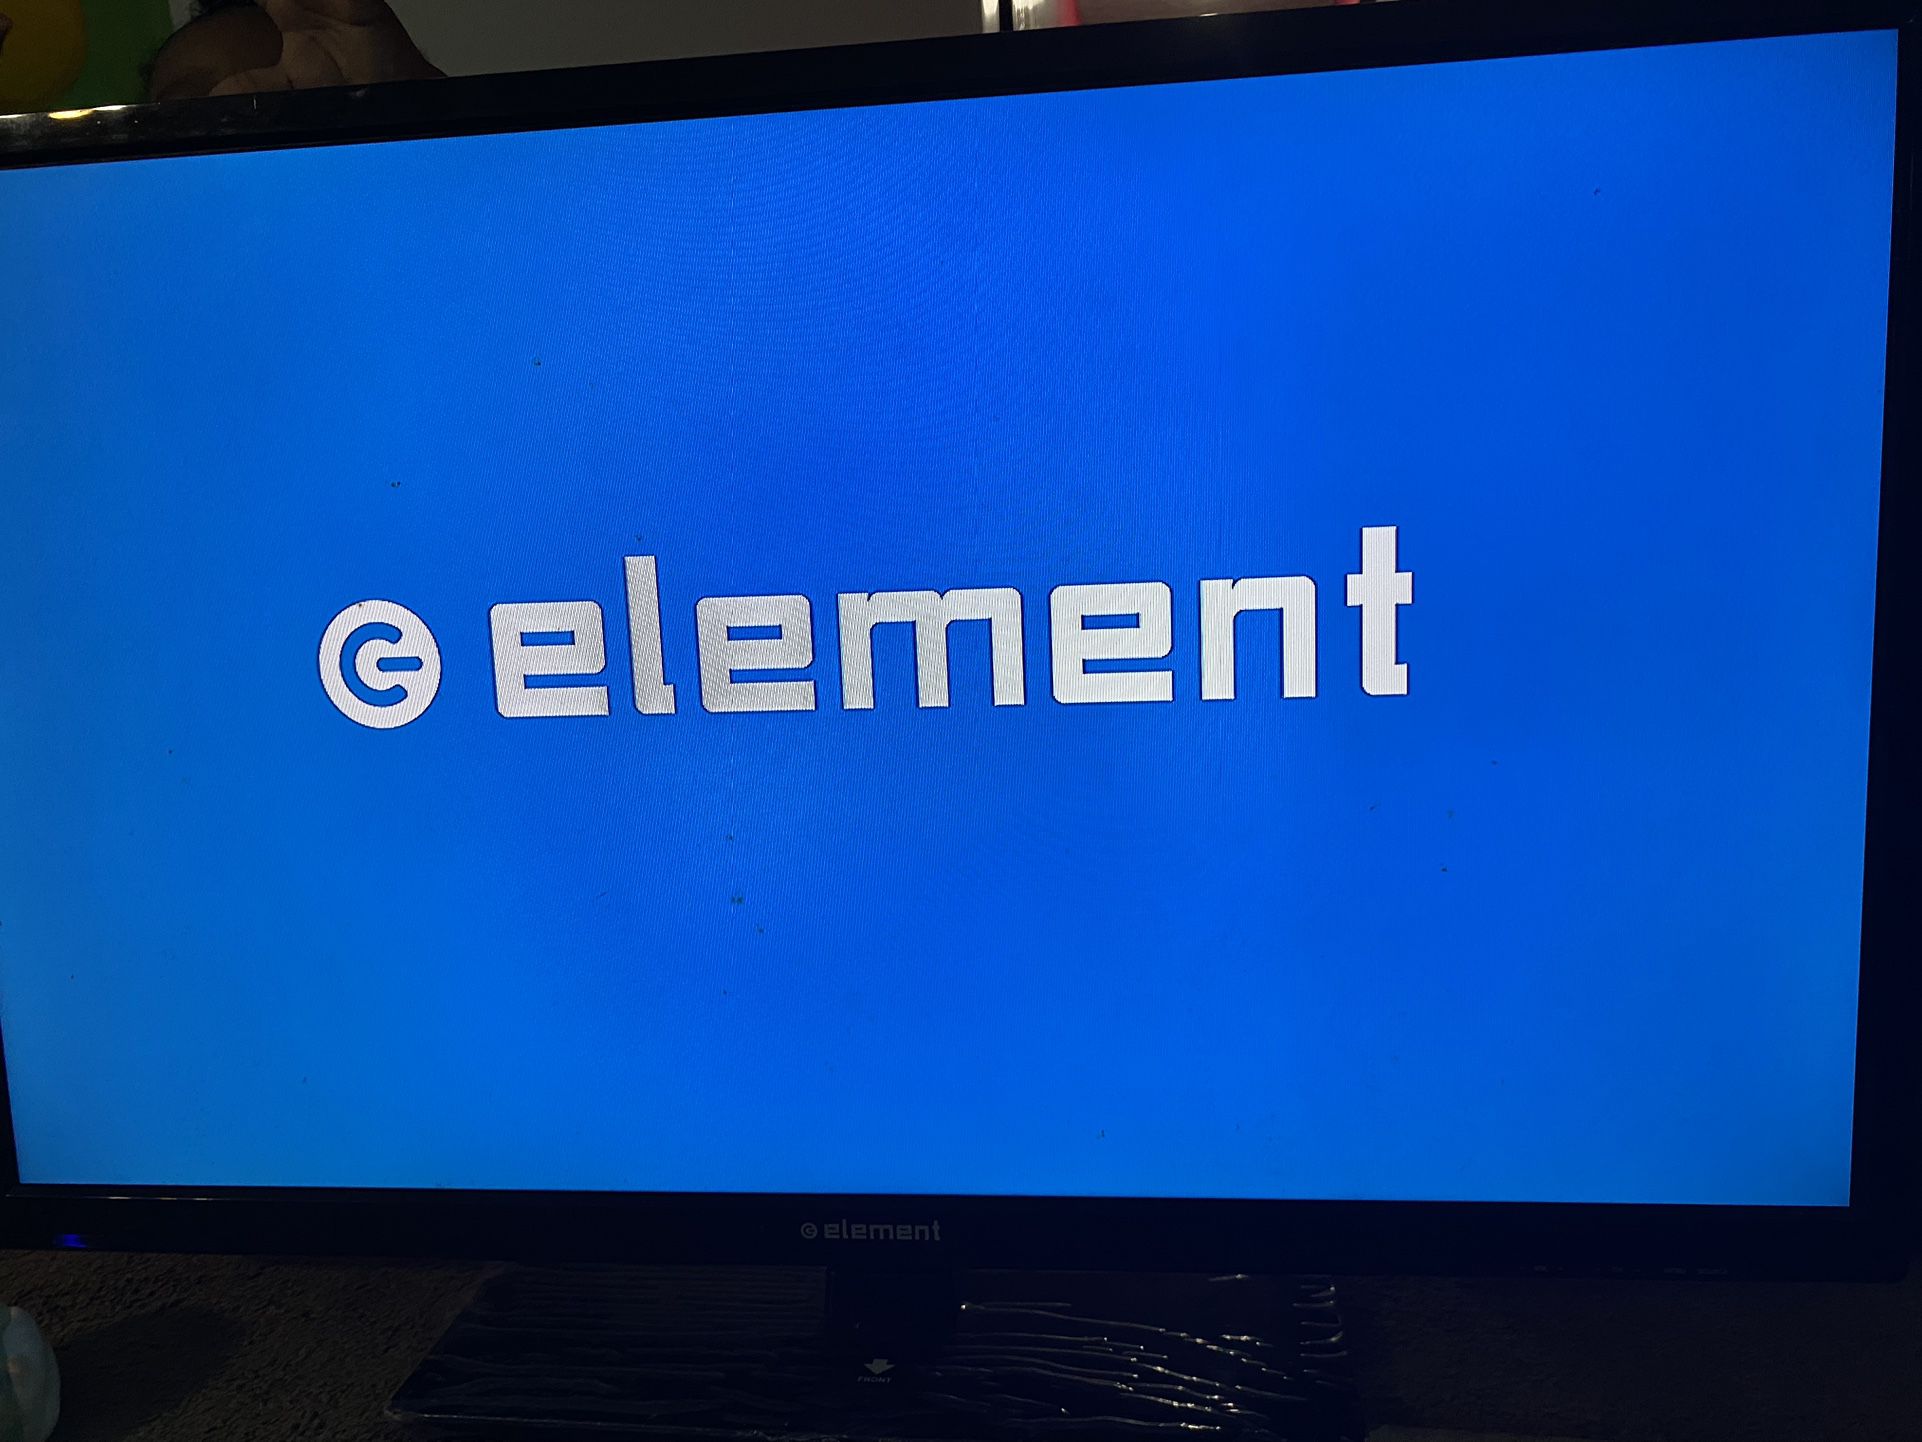 Element 32” ROKU TV